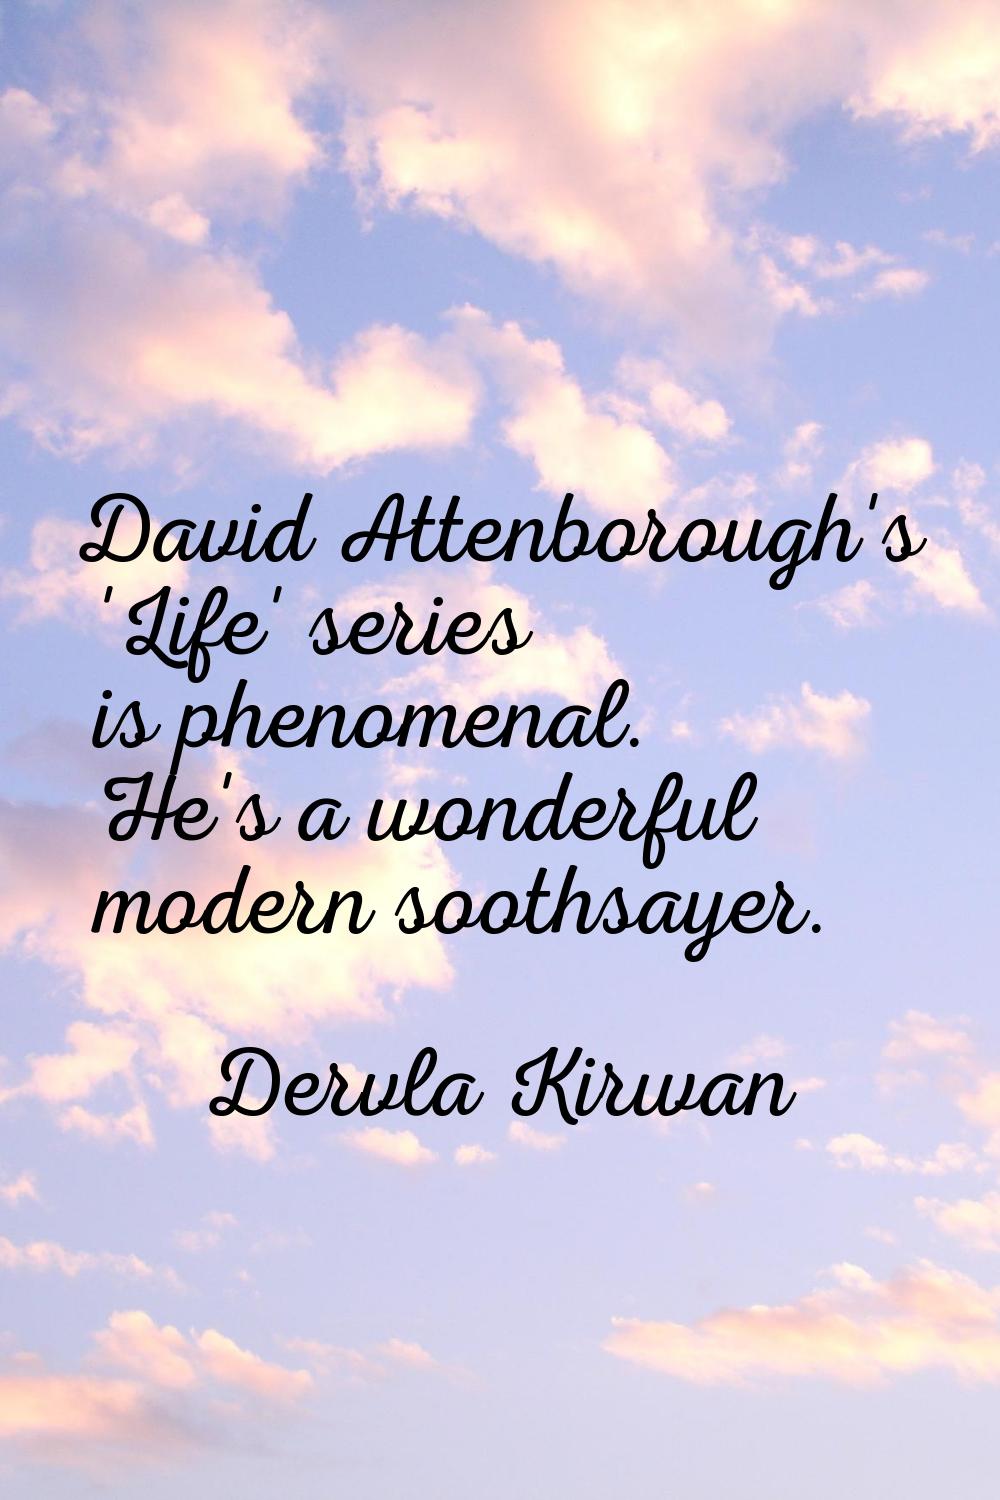 David Attenborough's 'Life' series is phenomenal. He's a wonderful modern soothsayer.